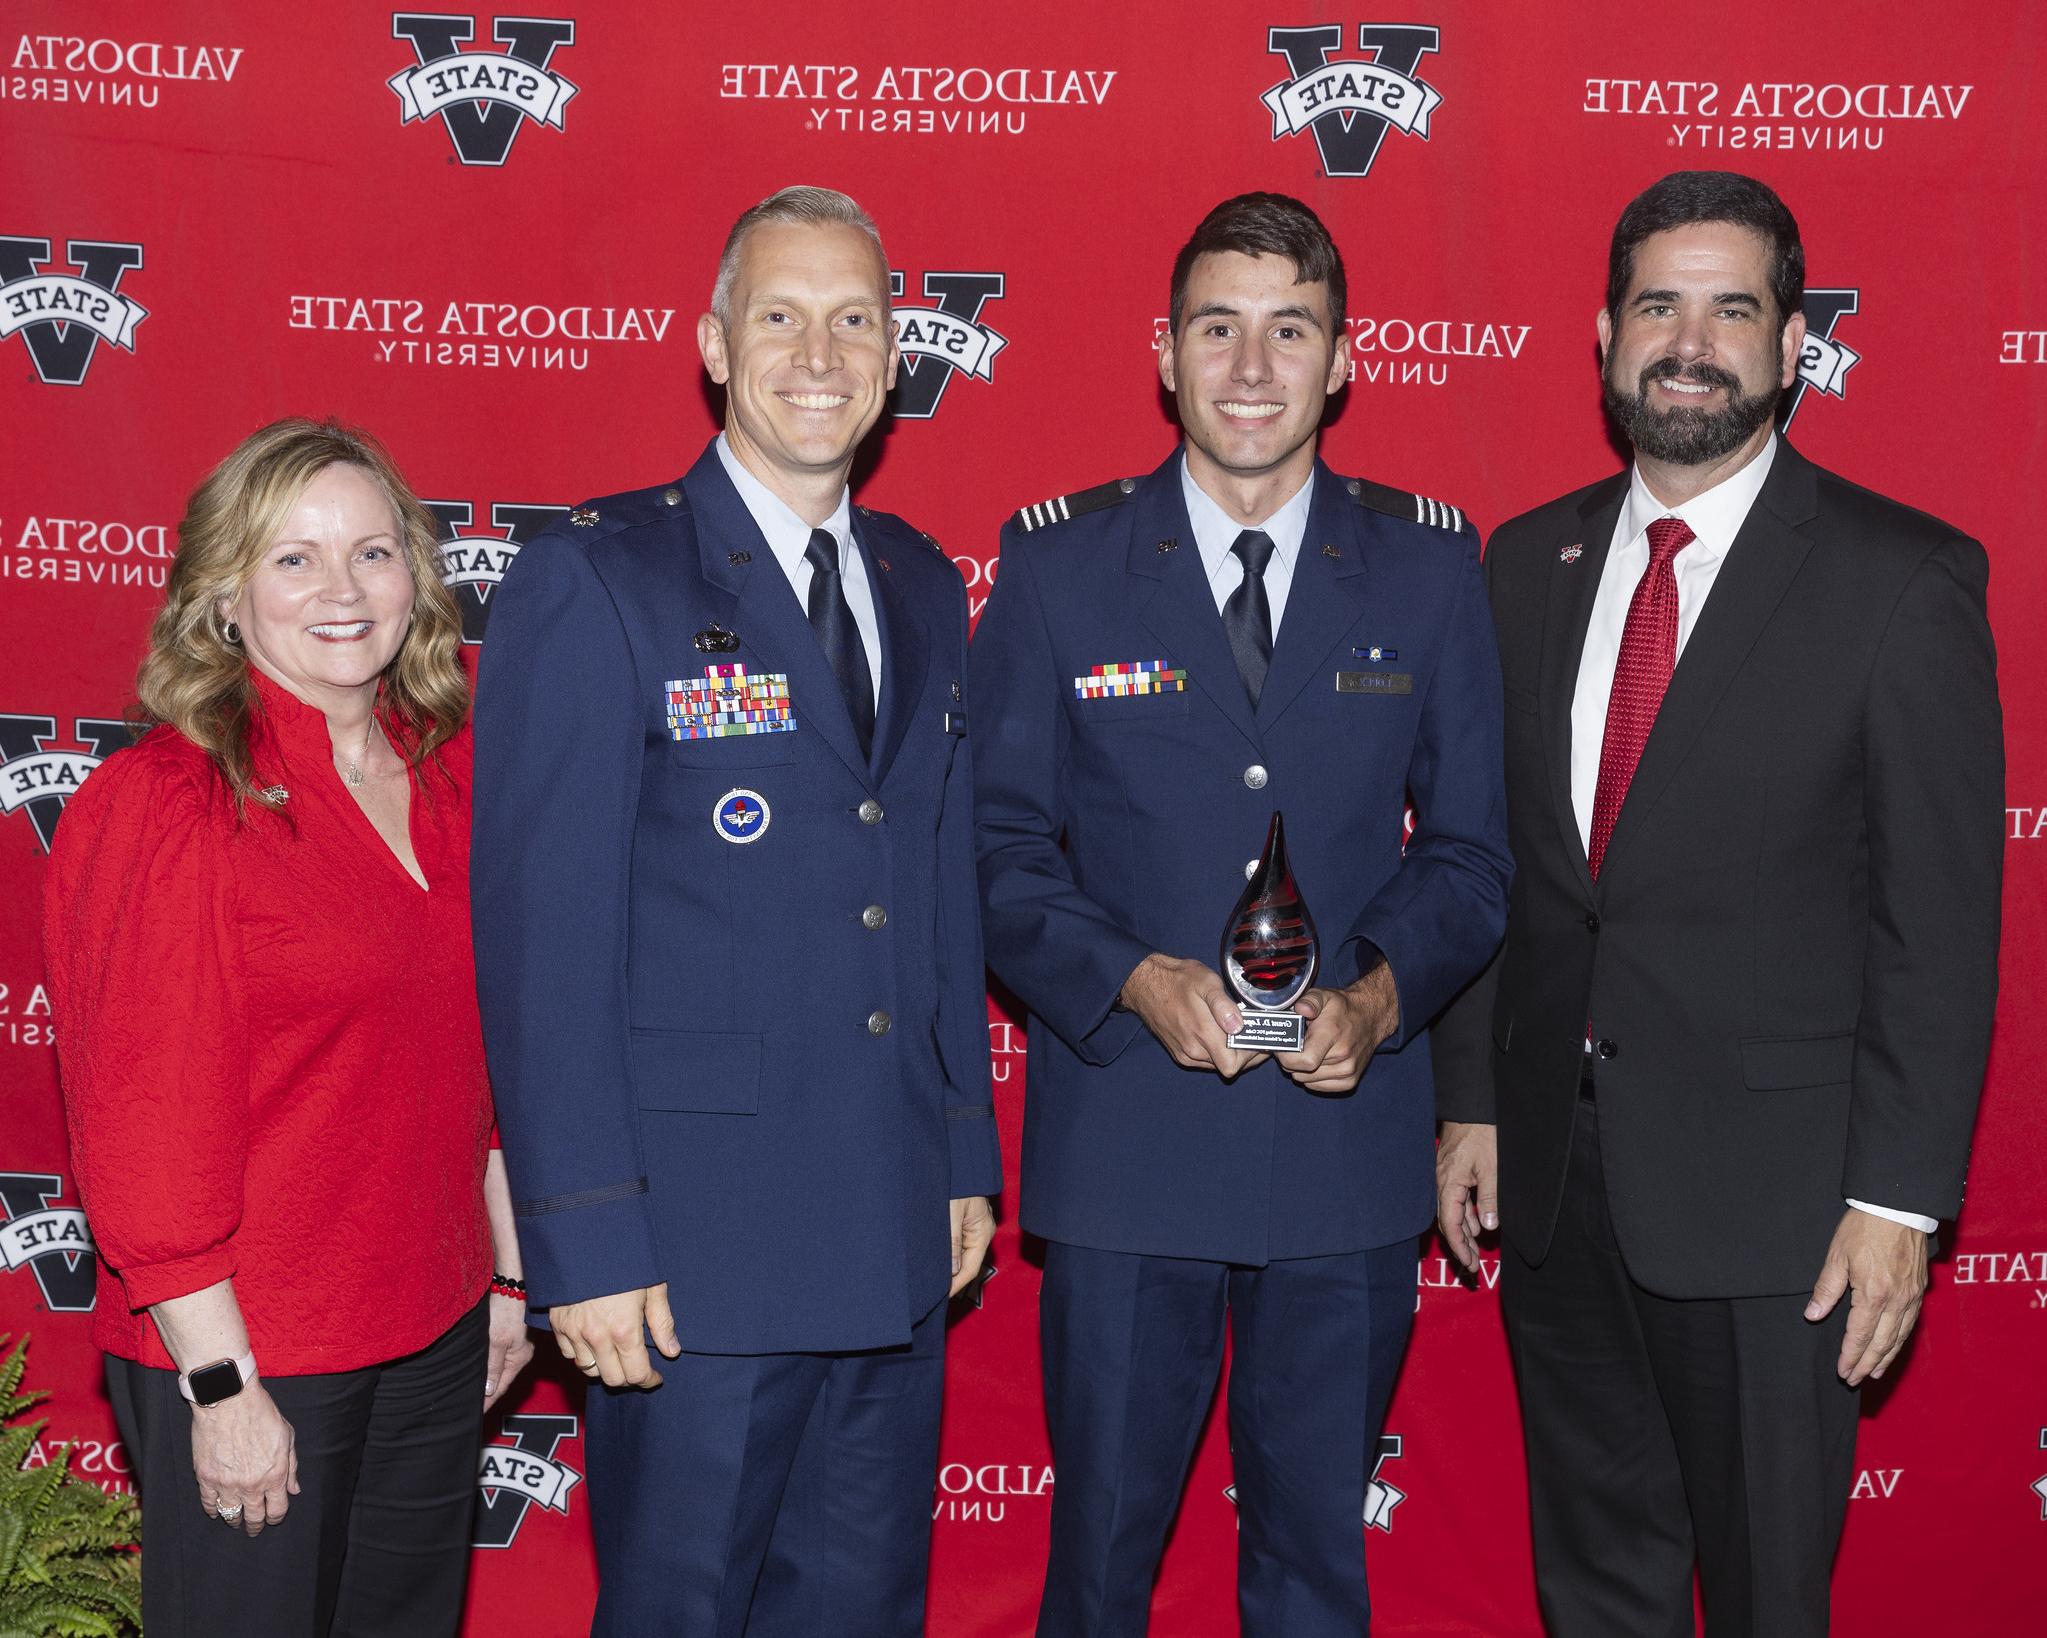 Grant Lopez Earns Most Outstanding Cadet Award at VSU